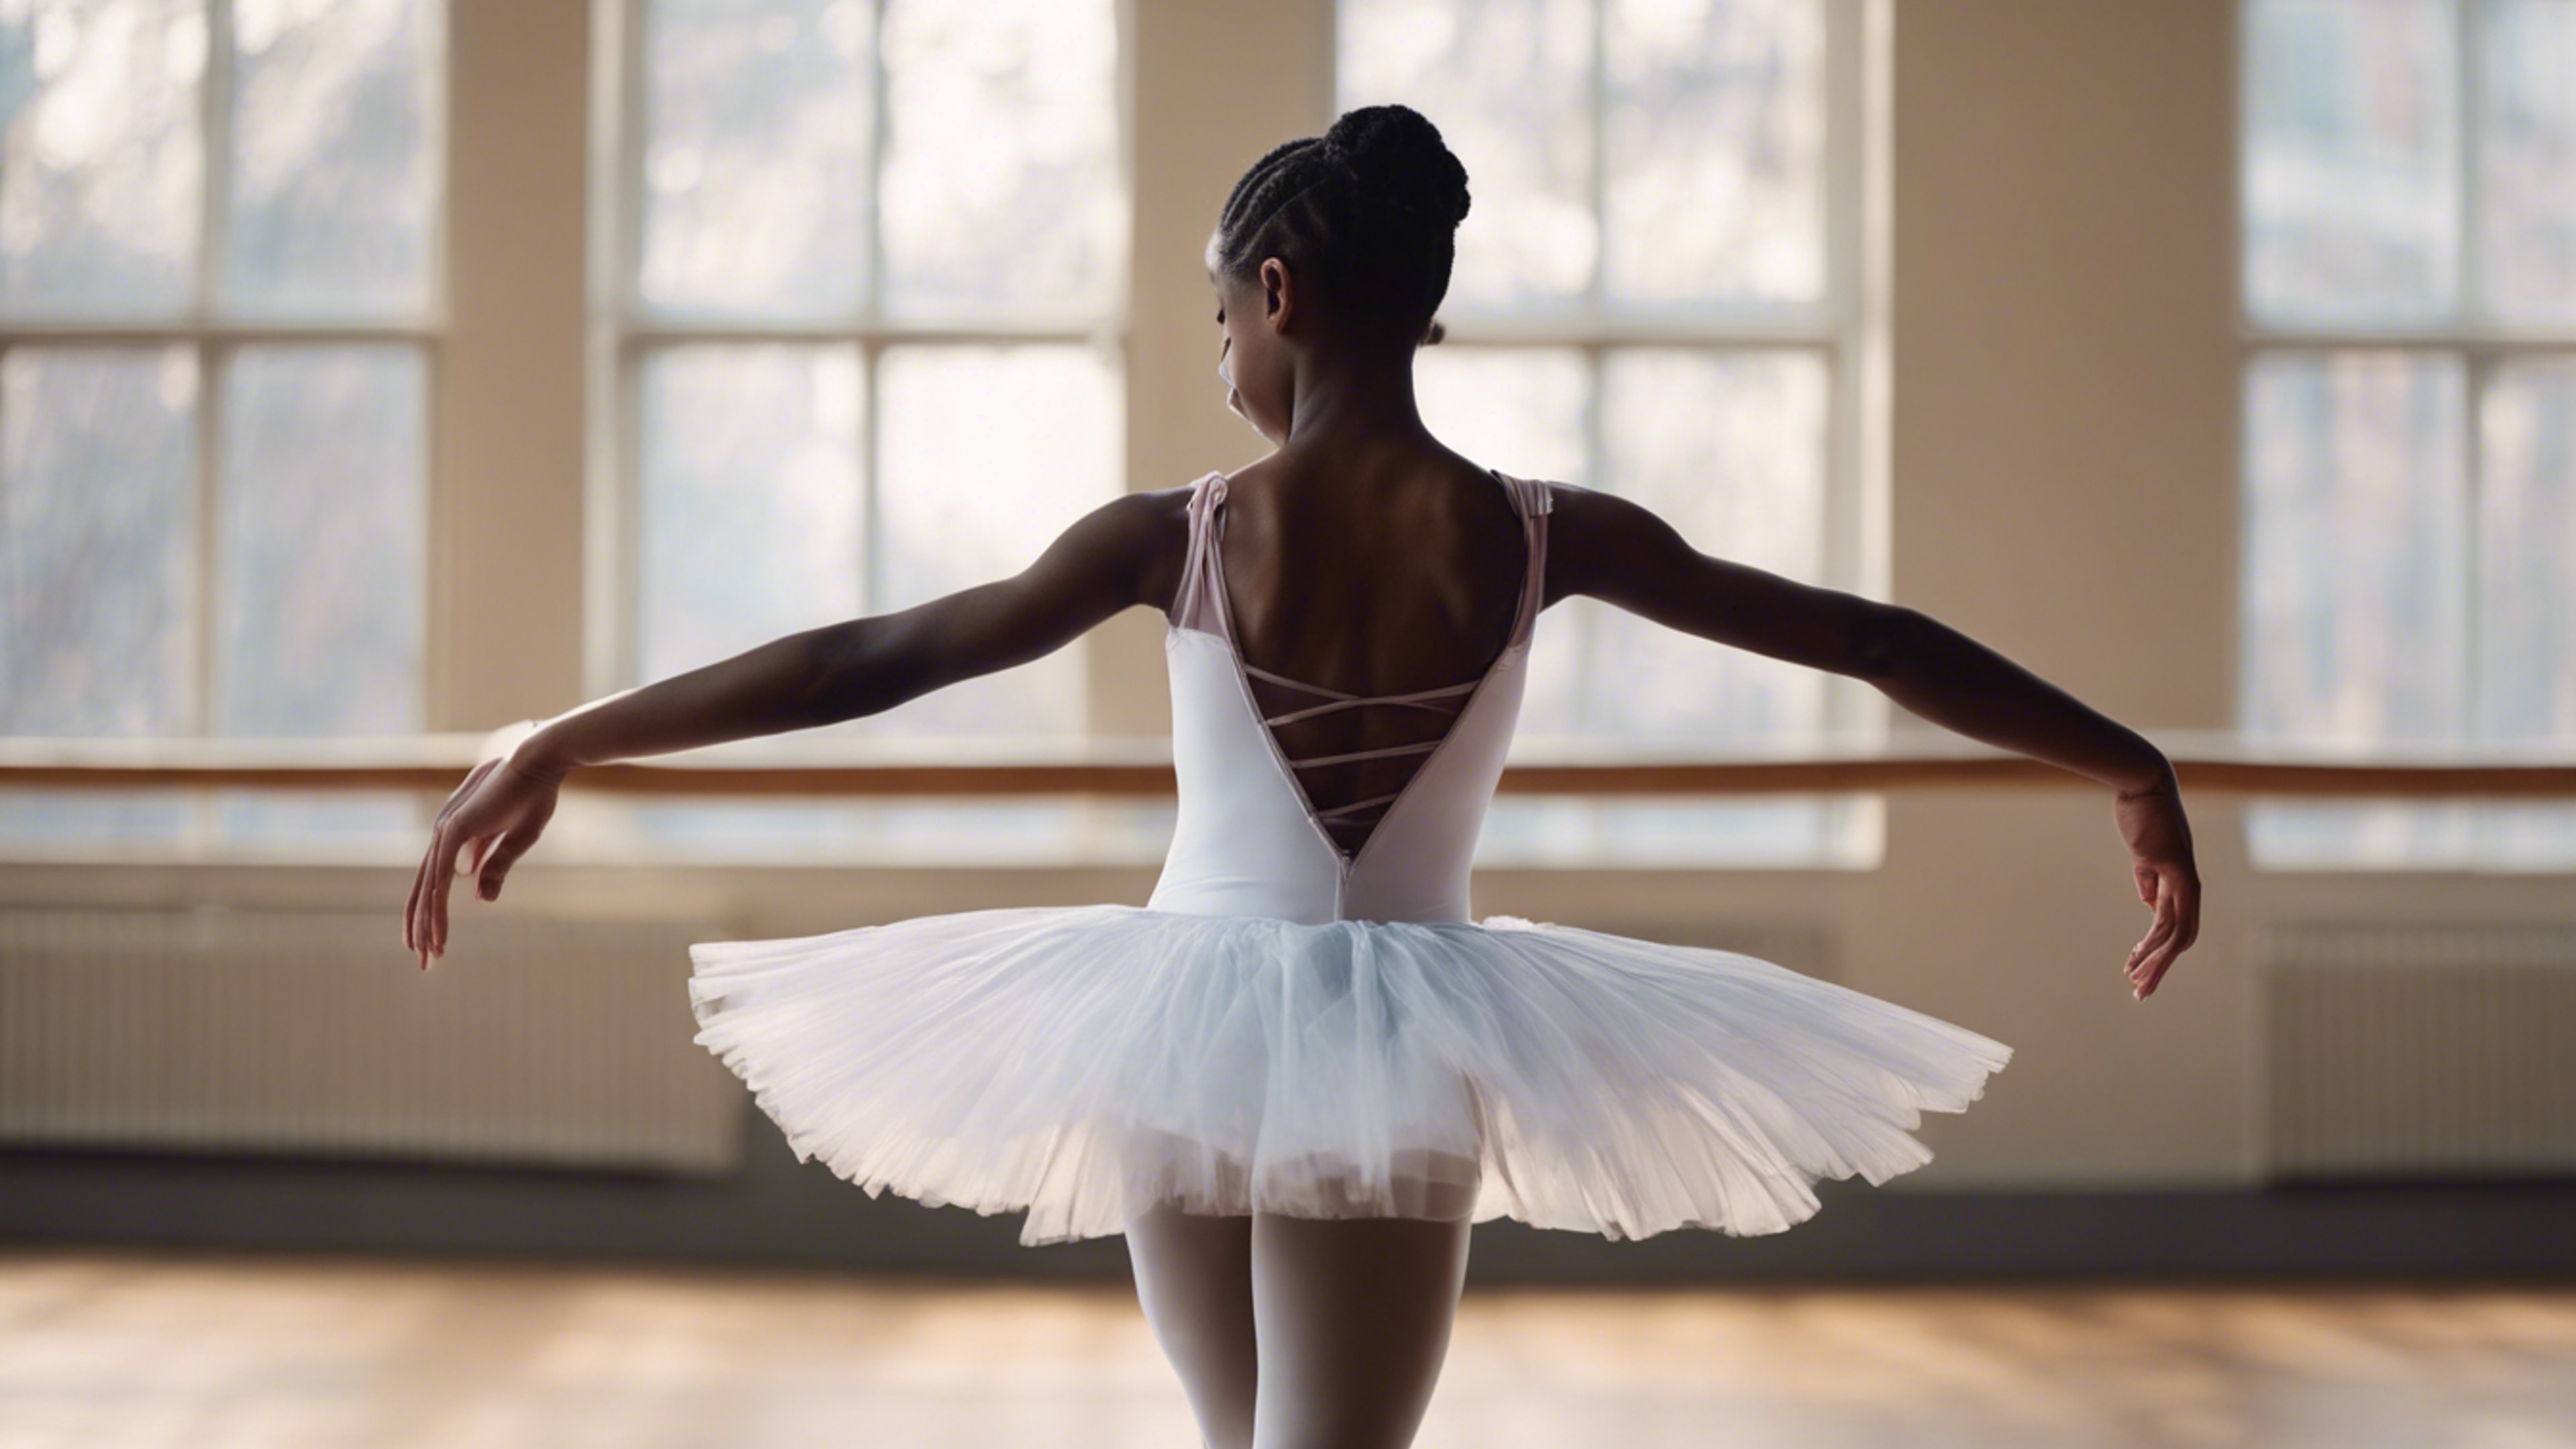 A young black girl practicing ballet in a beautiful satin tutu. Tapeta[c9fc18550cde4bfca1b8]